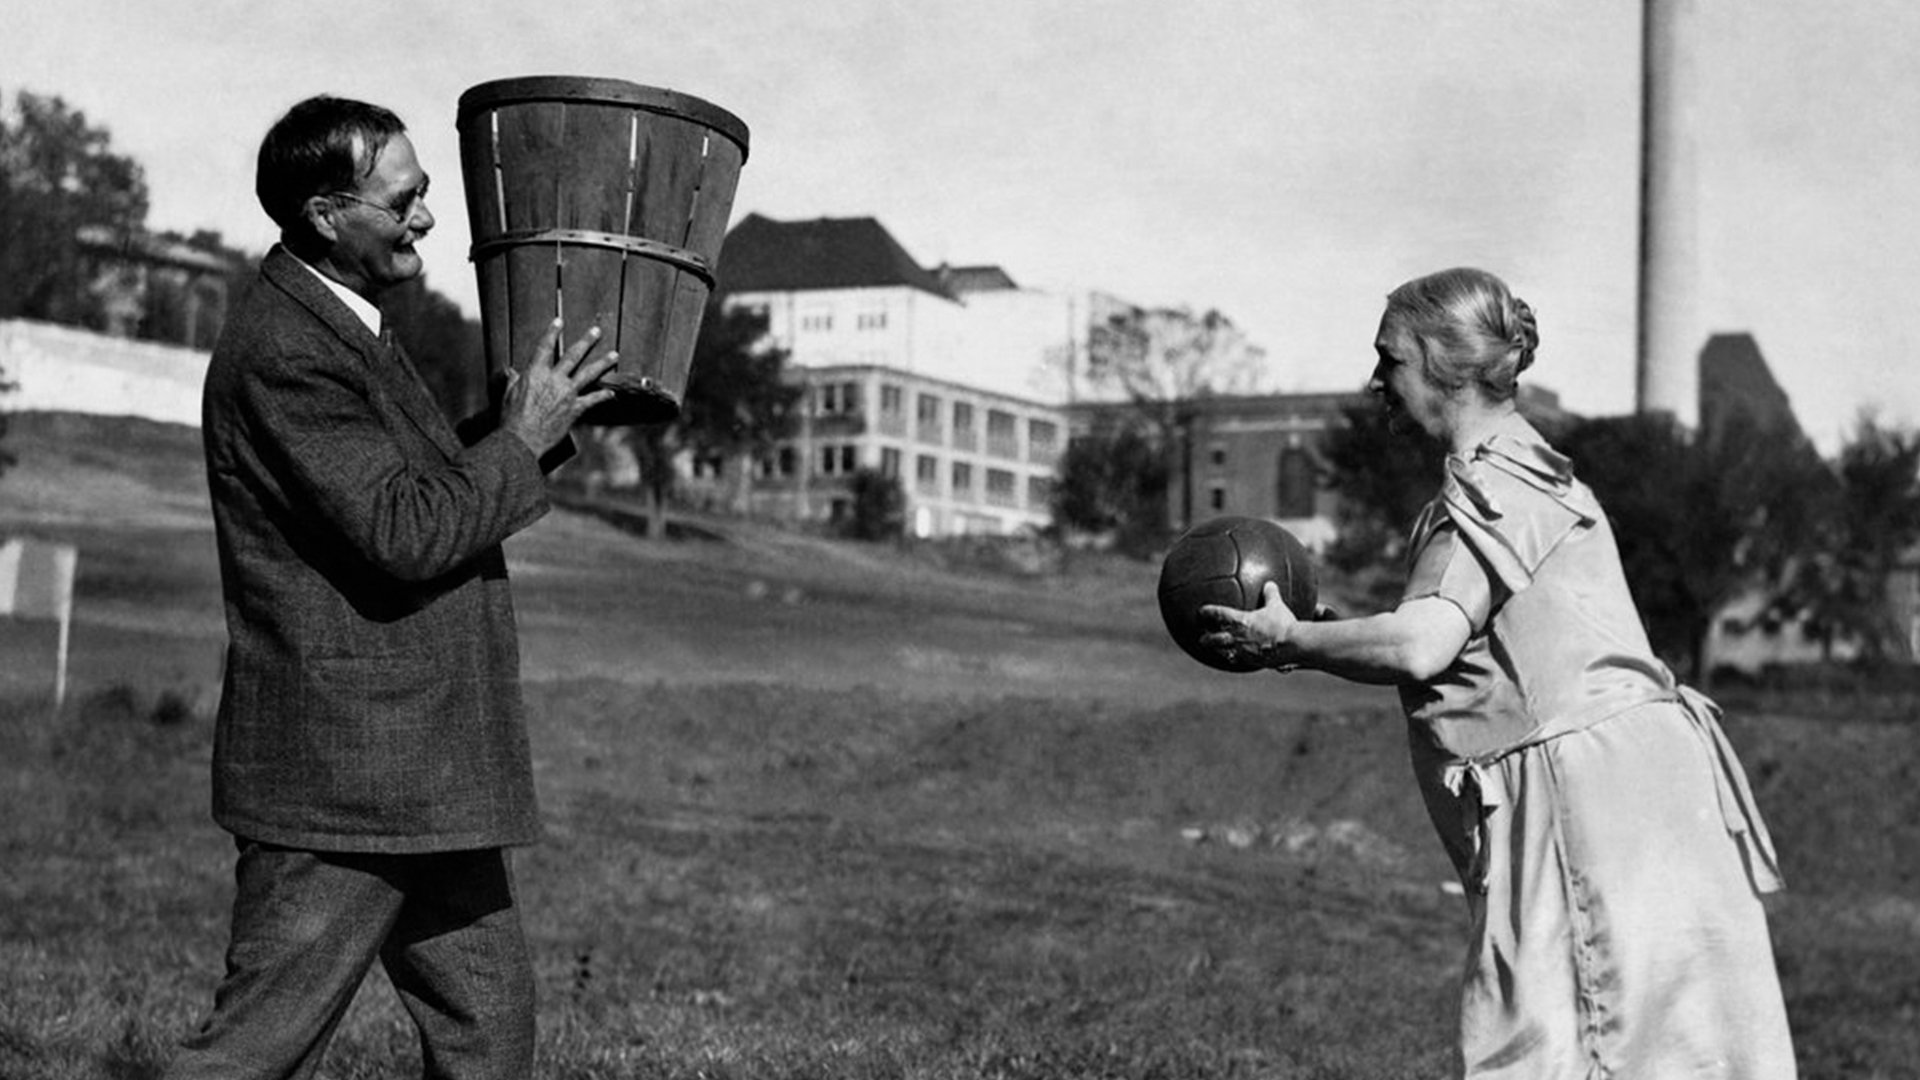 James Naismith inventore del basket